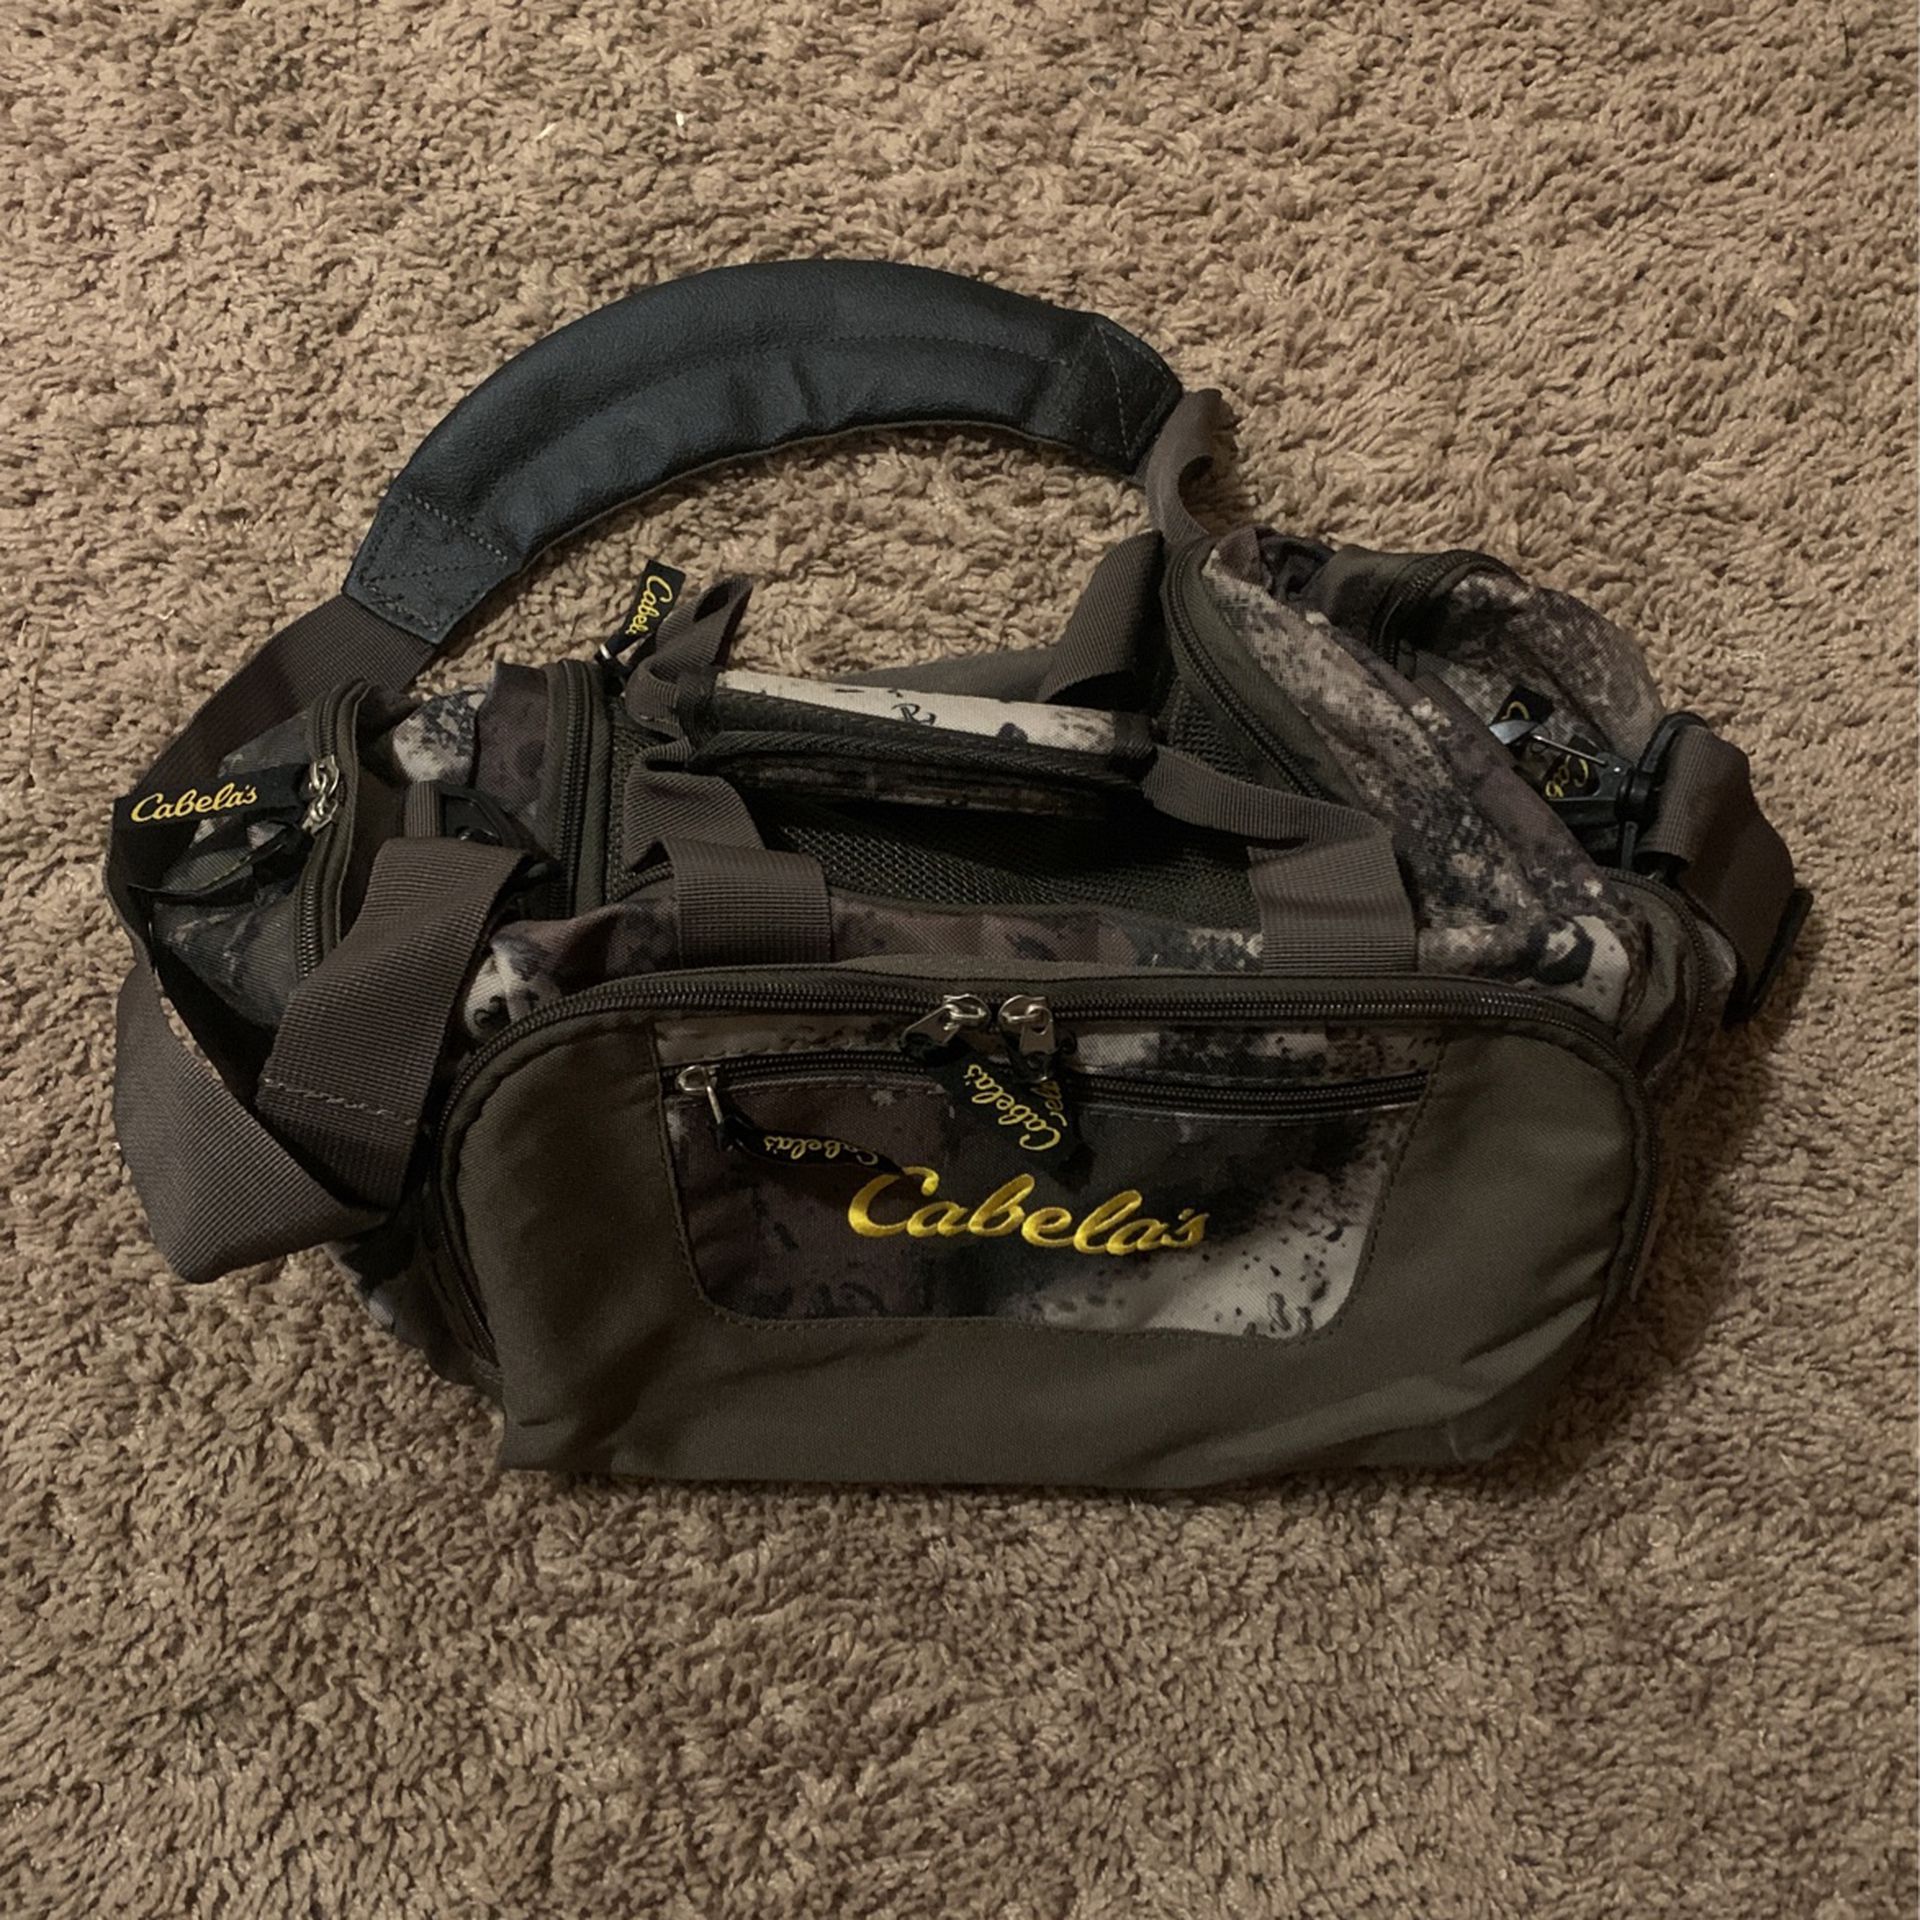 Cabela’s gear bag